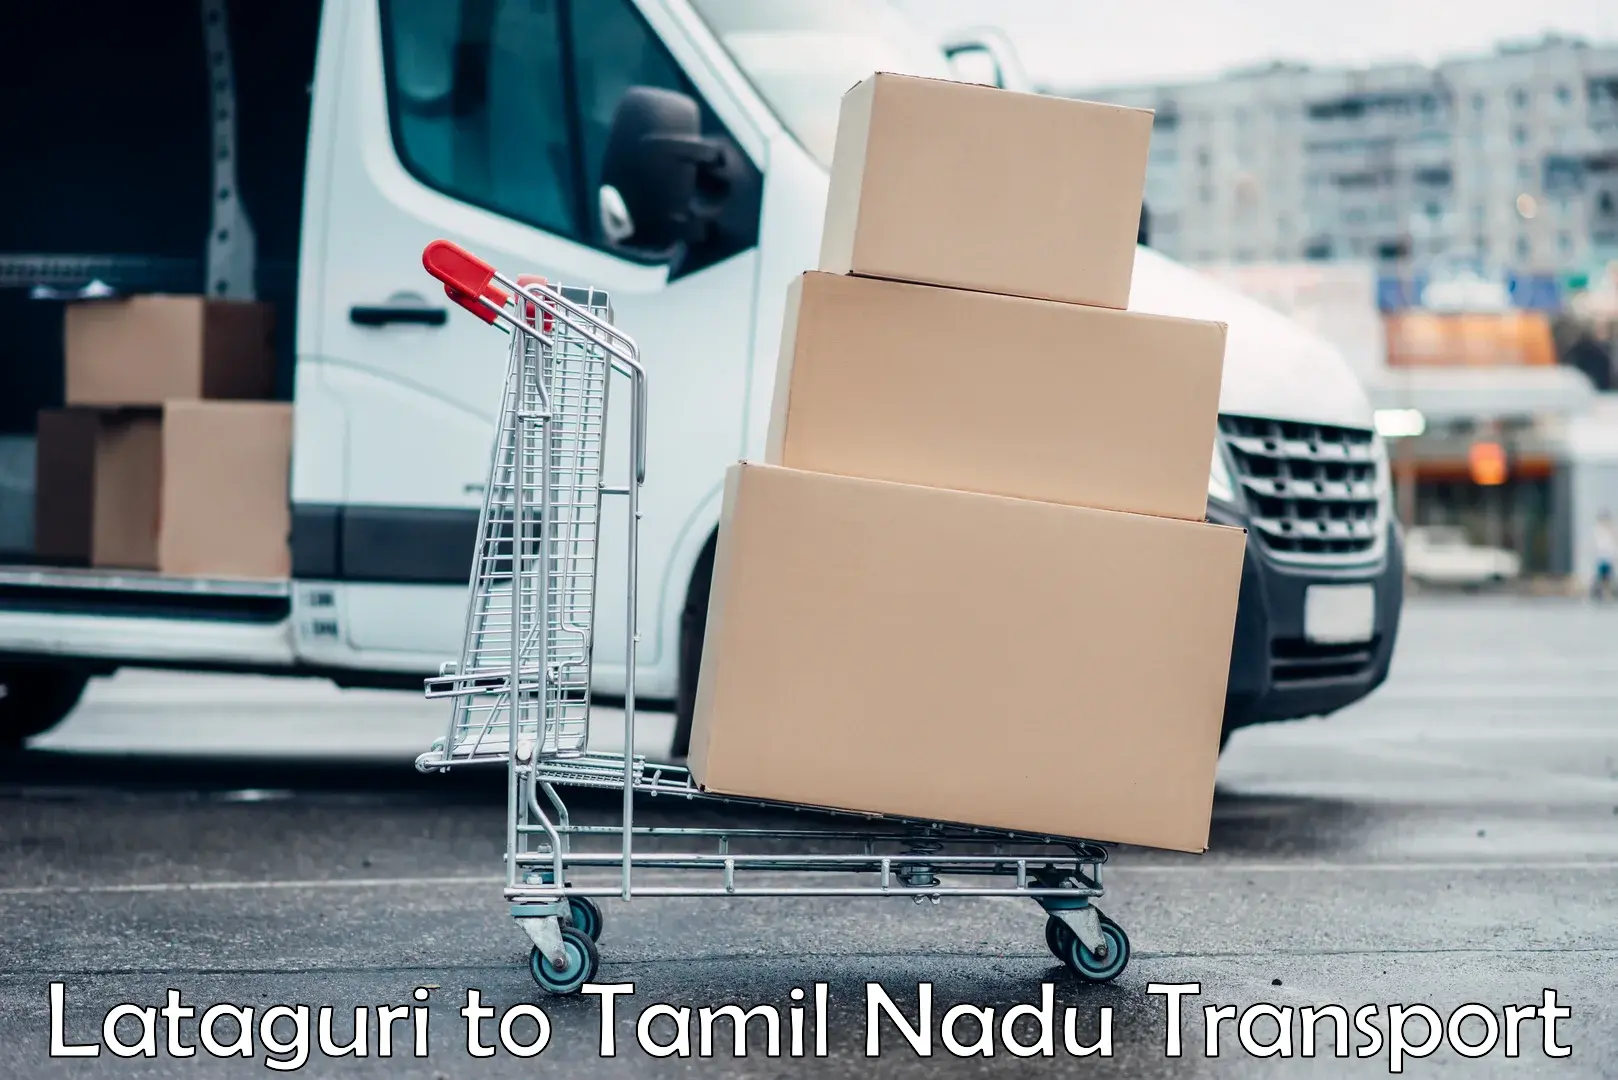 Delivery service Lataguri to Thiruthuraipoondi